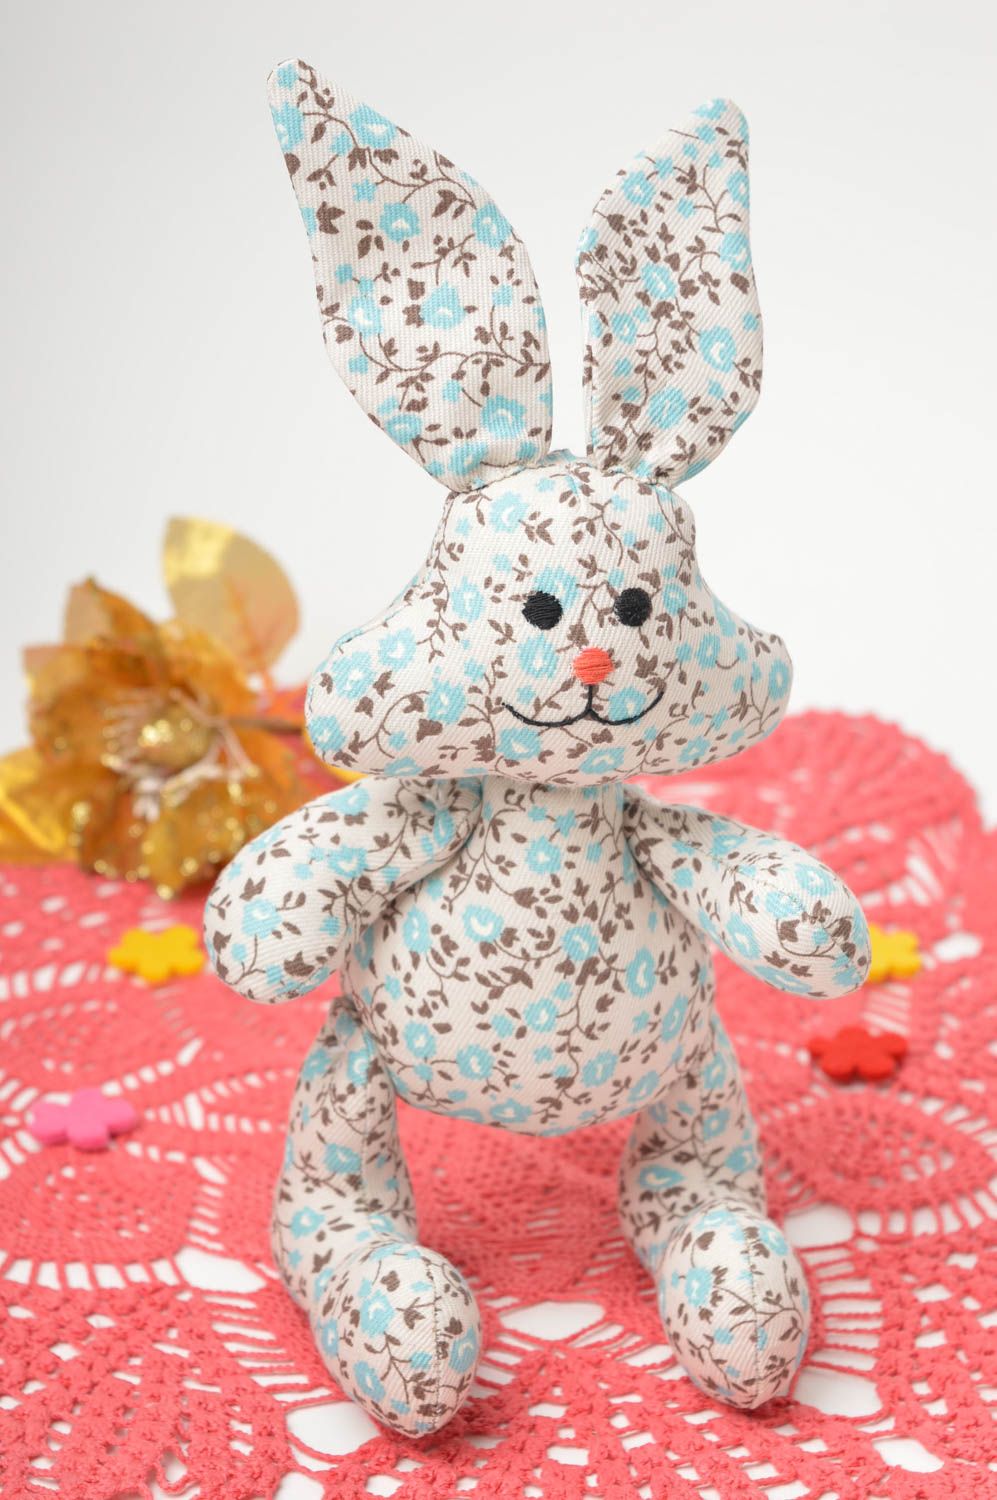 Decorative handmade bunny toy stuffed toy for children soft toy interior decor photo 1